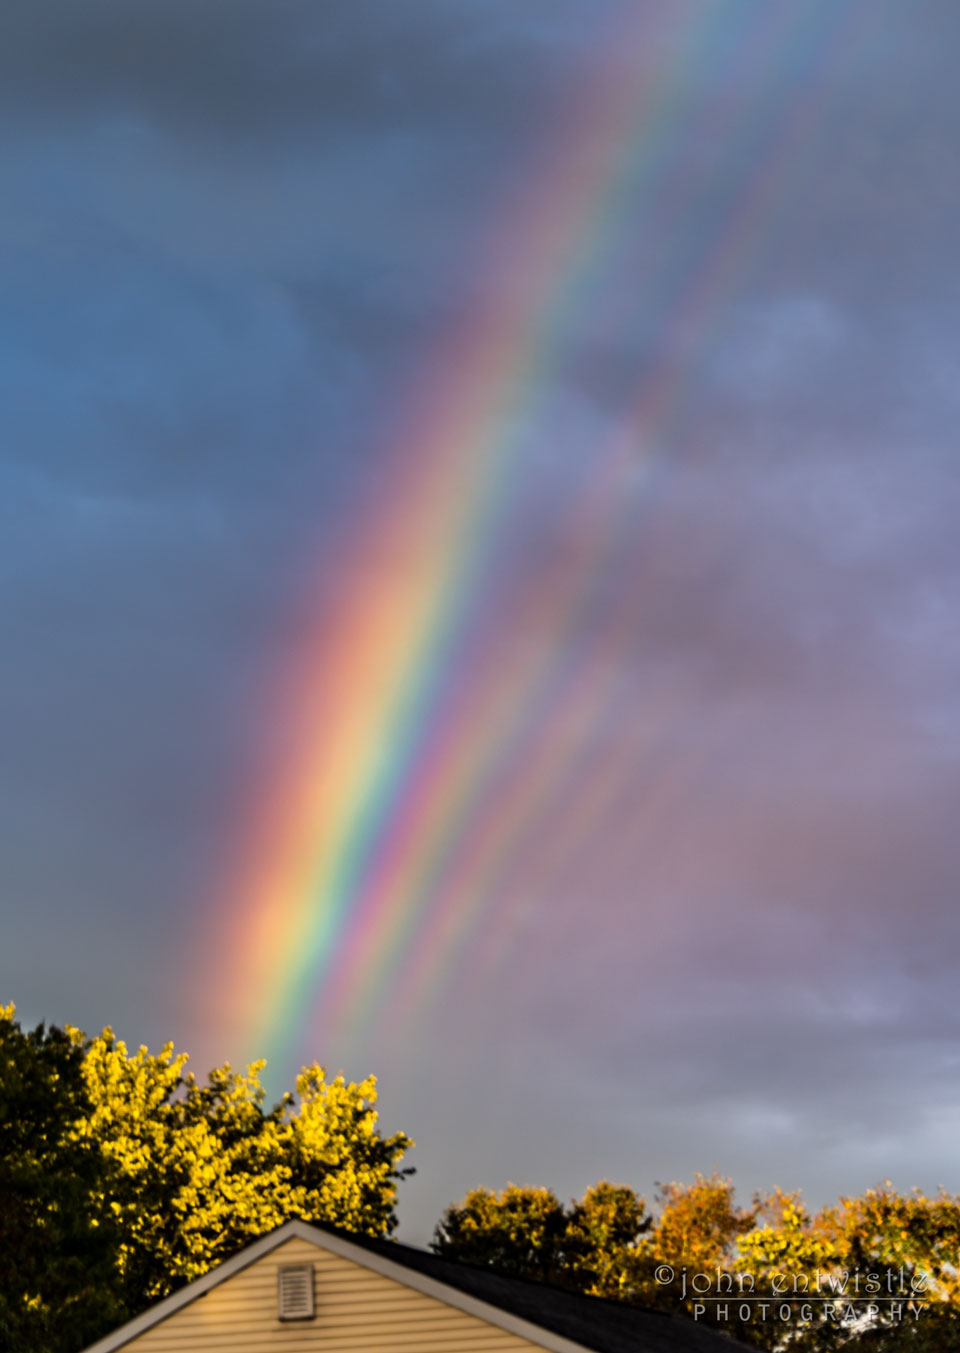 Supernumerary Rainbows over New Jersey